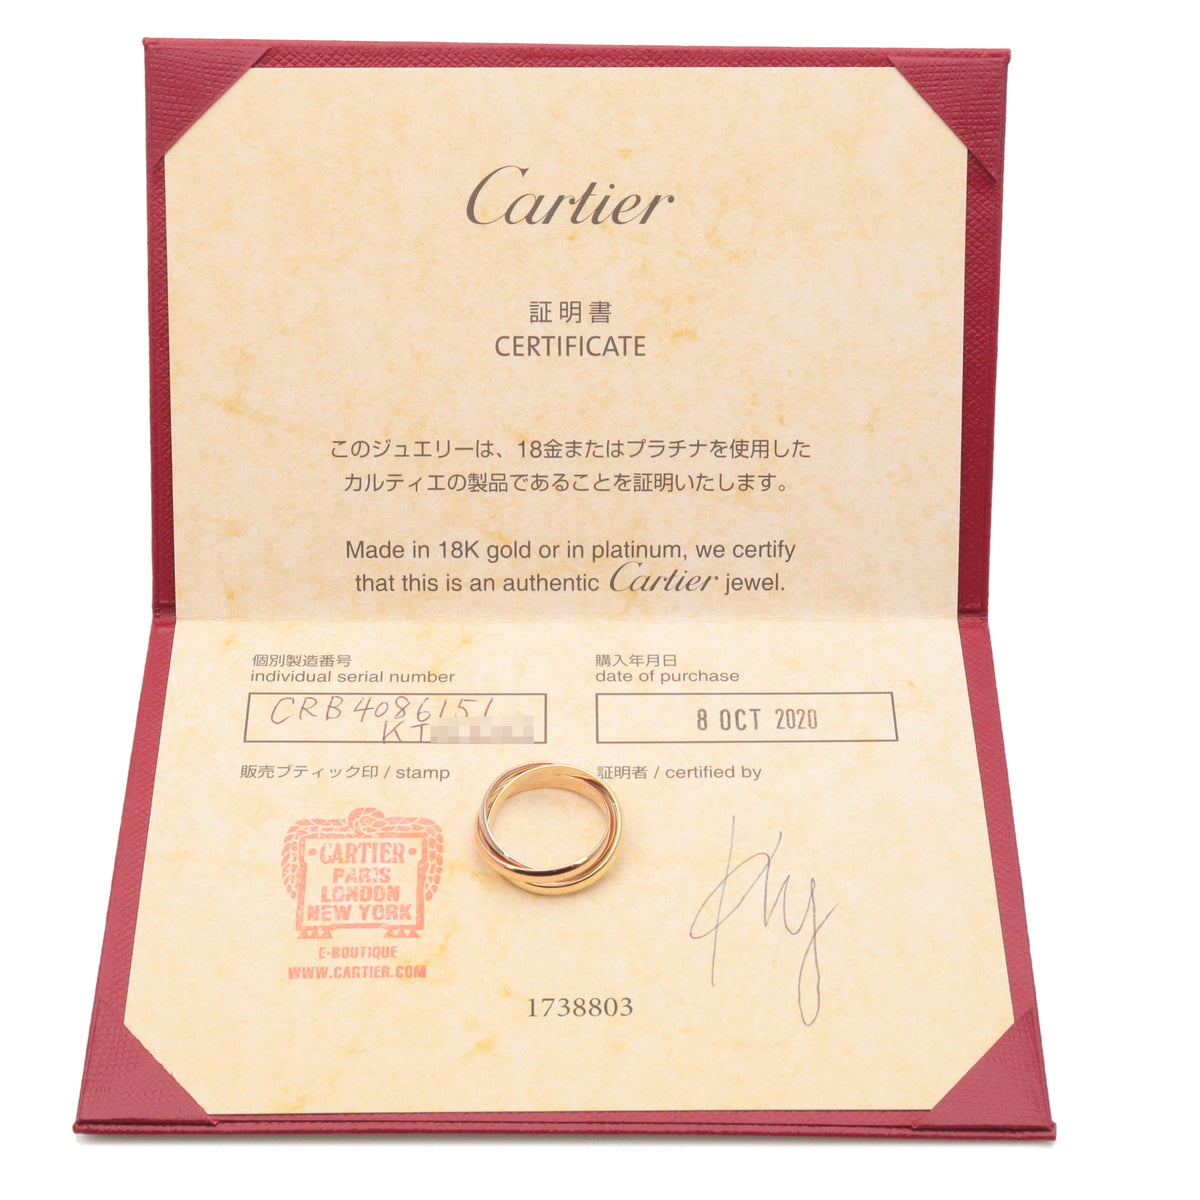 Cartier Trinity Ring K18 750 YG/WG/PG #51 US5.5-6 EU51.5